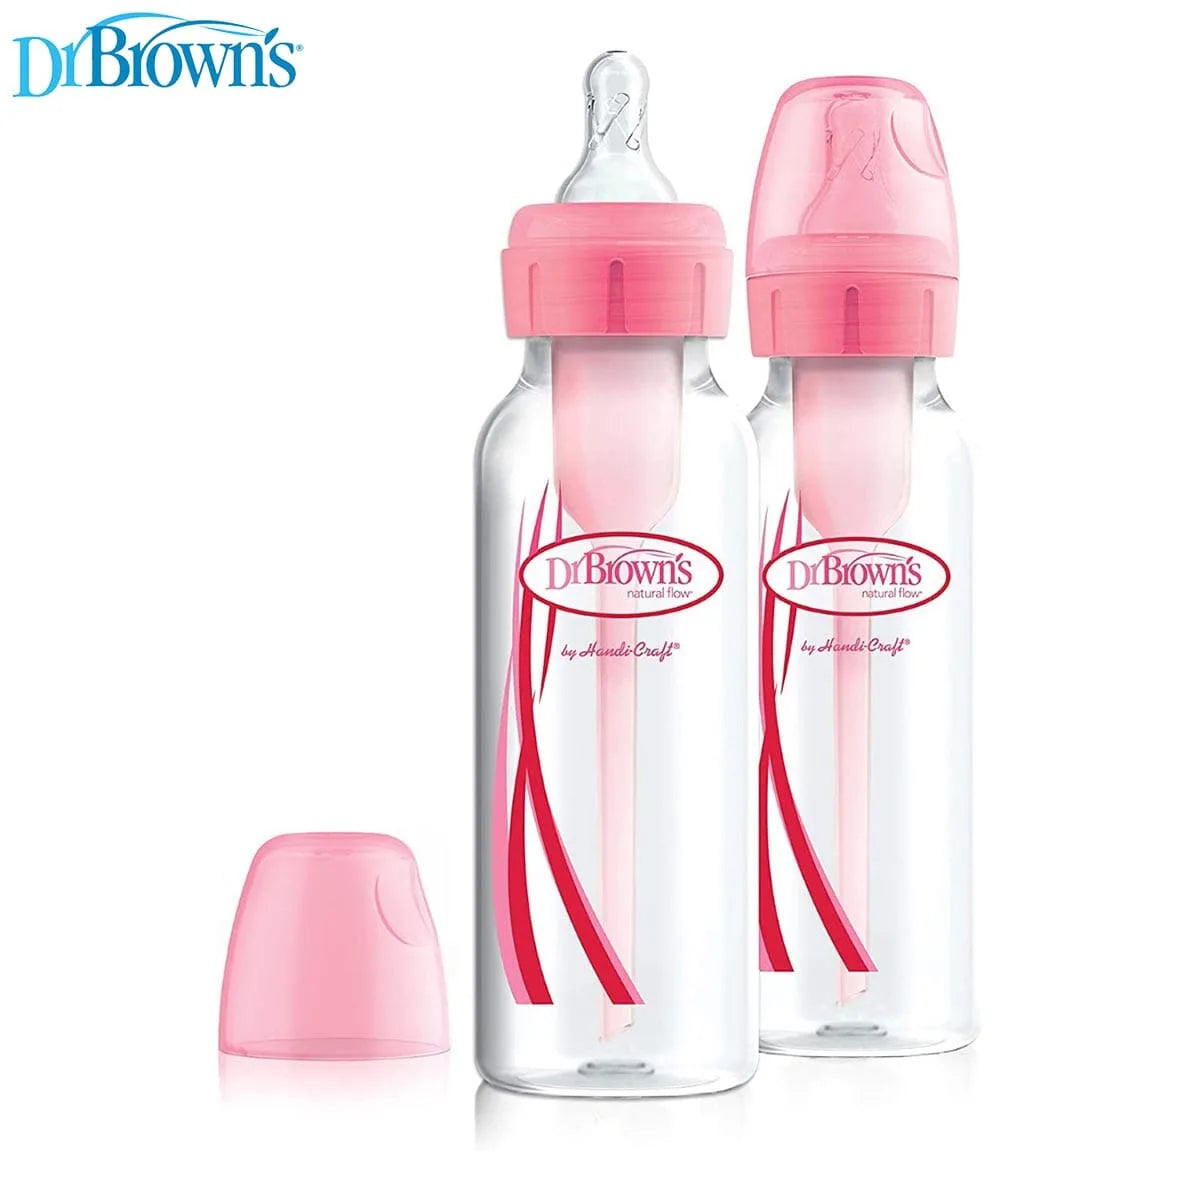 8 oz/250 ml PP Narrow Options+ Bottle 2-Pack (Pink)